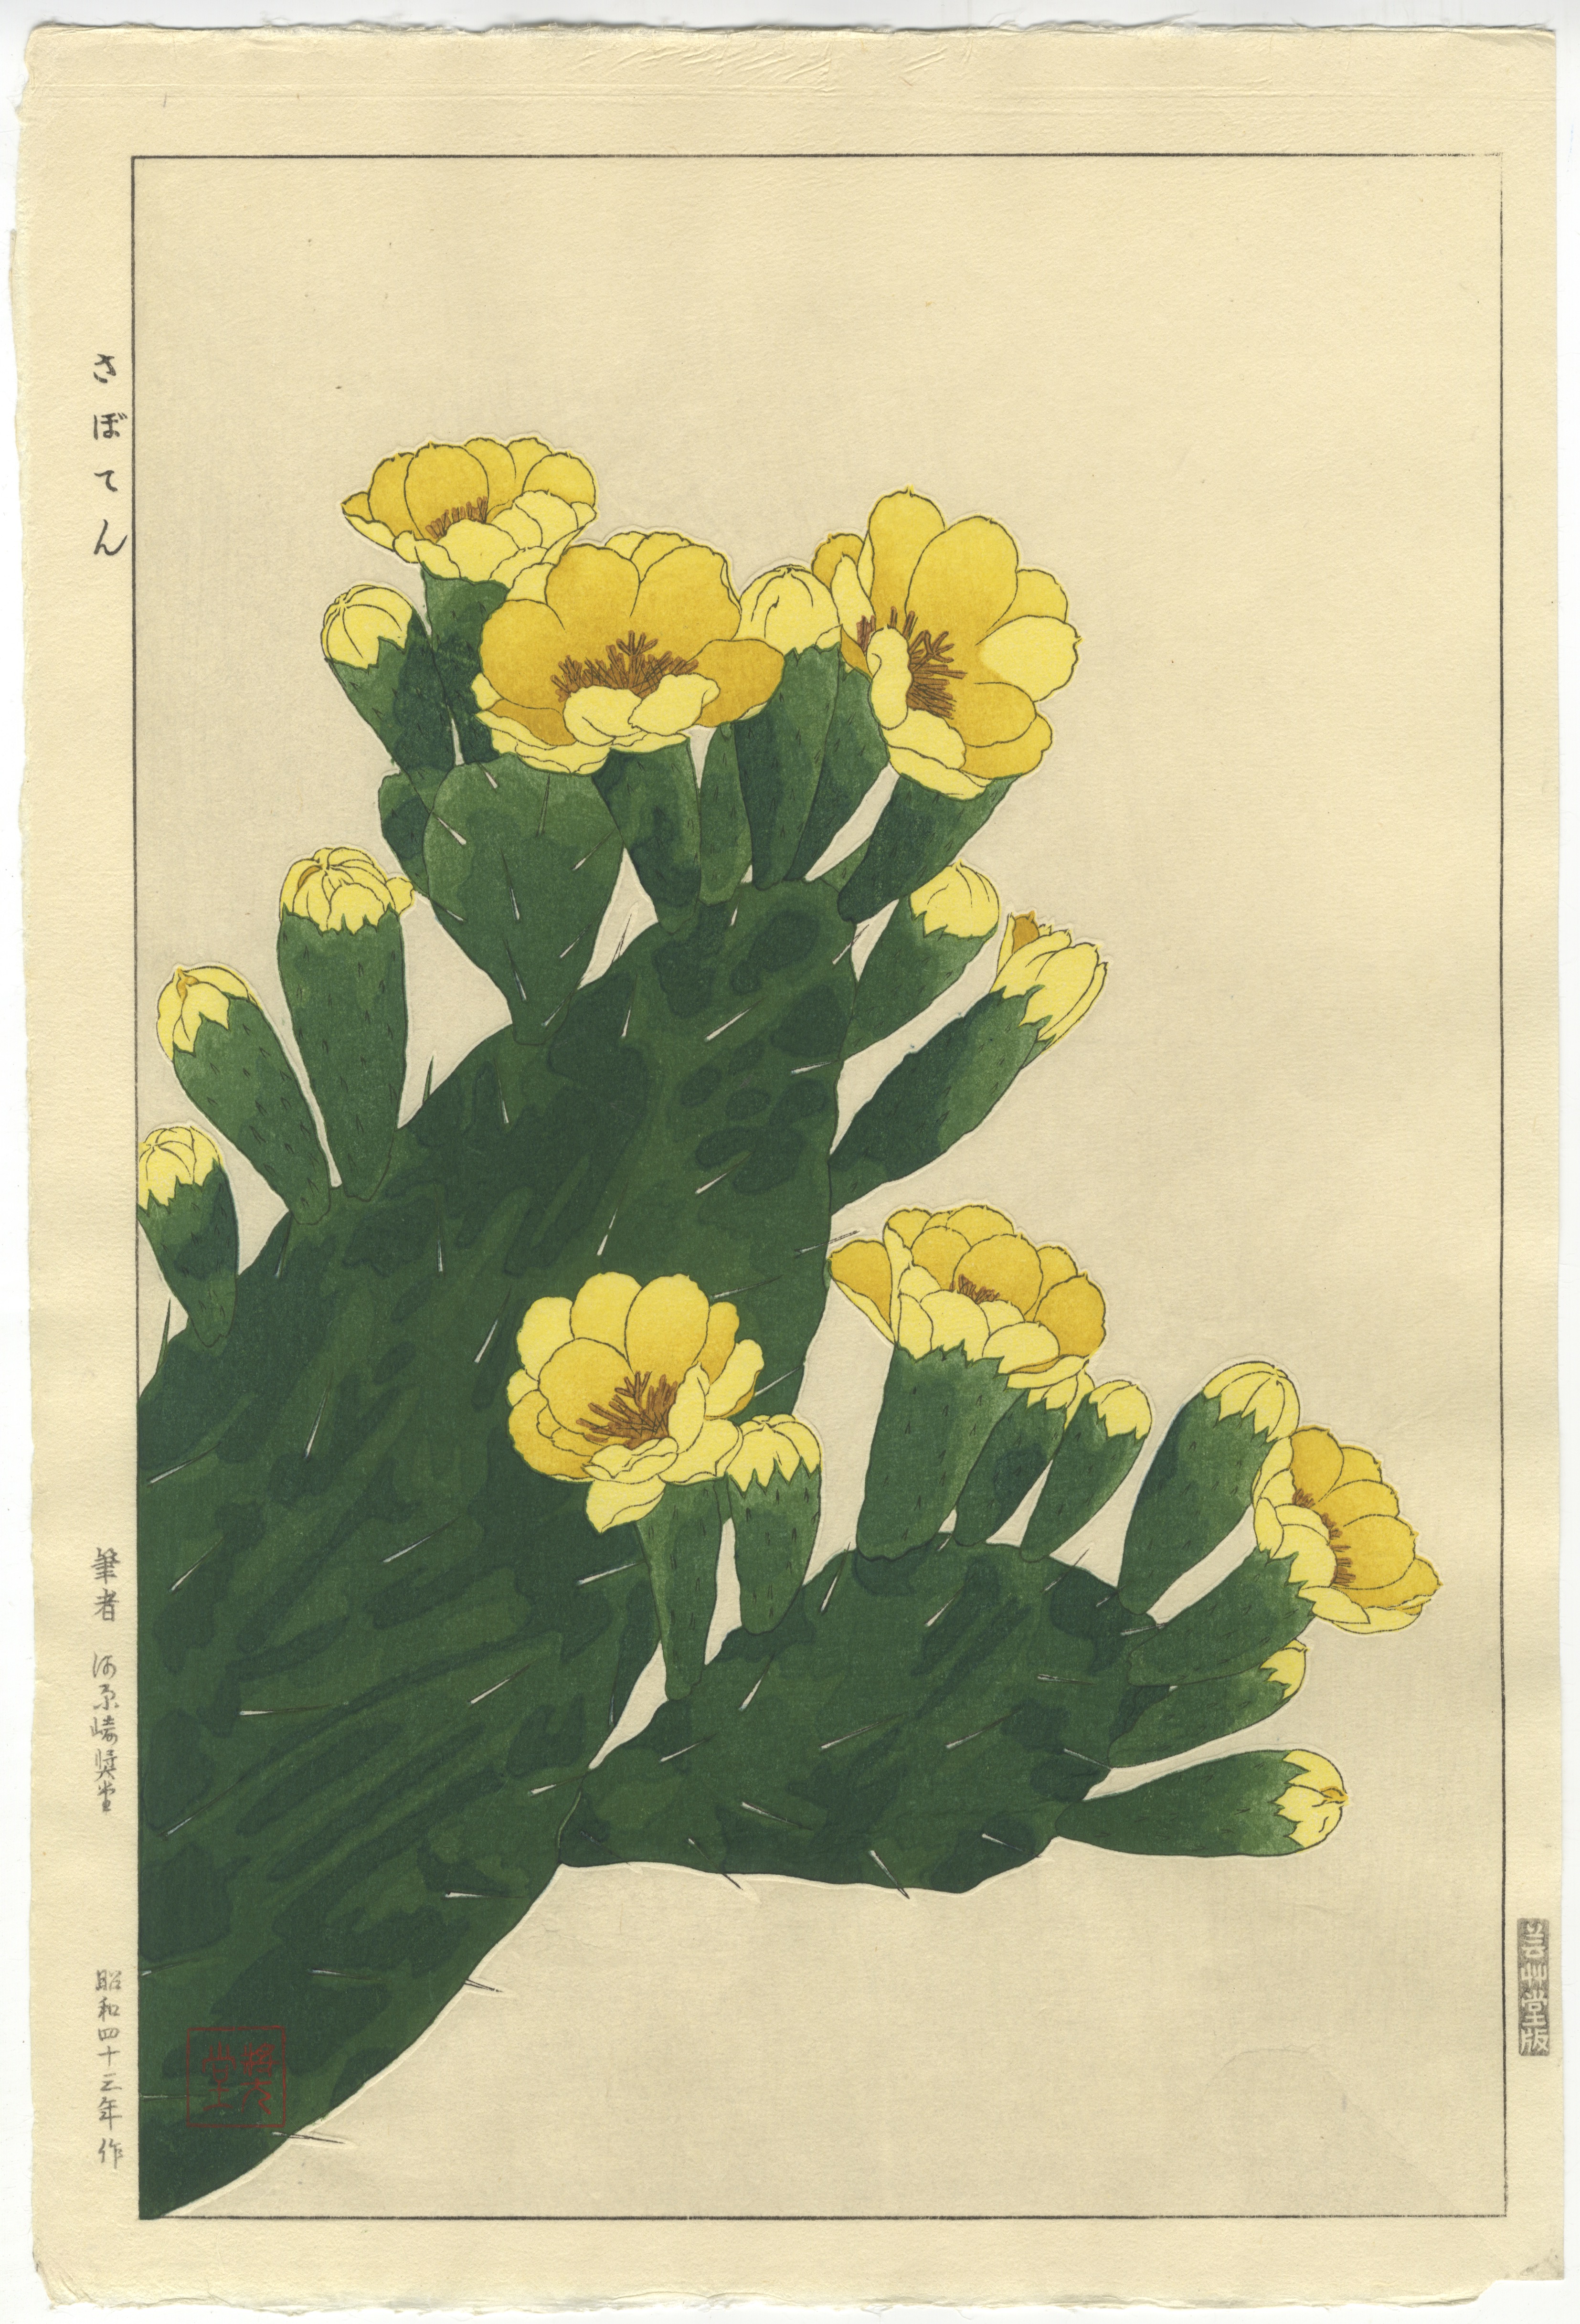 Shodo Kawarazaki, Cactus, Original Japanese Woodblock Print